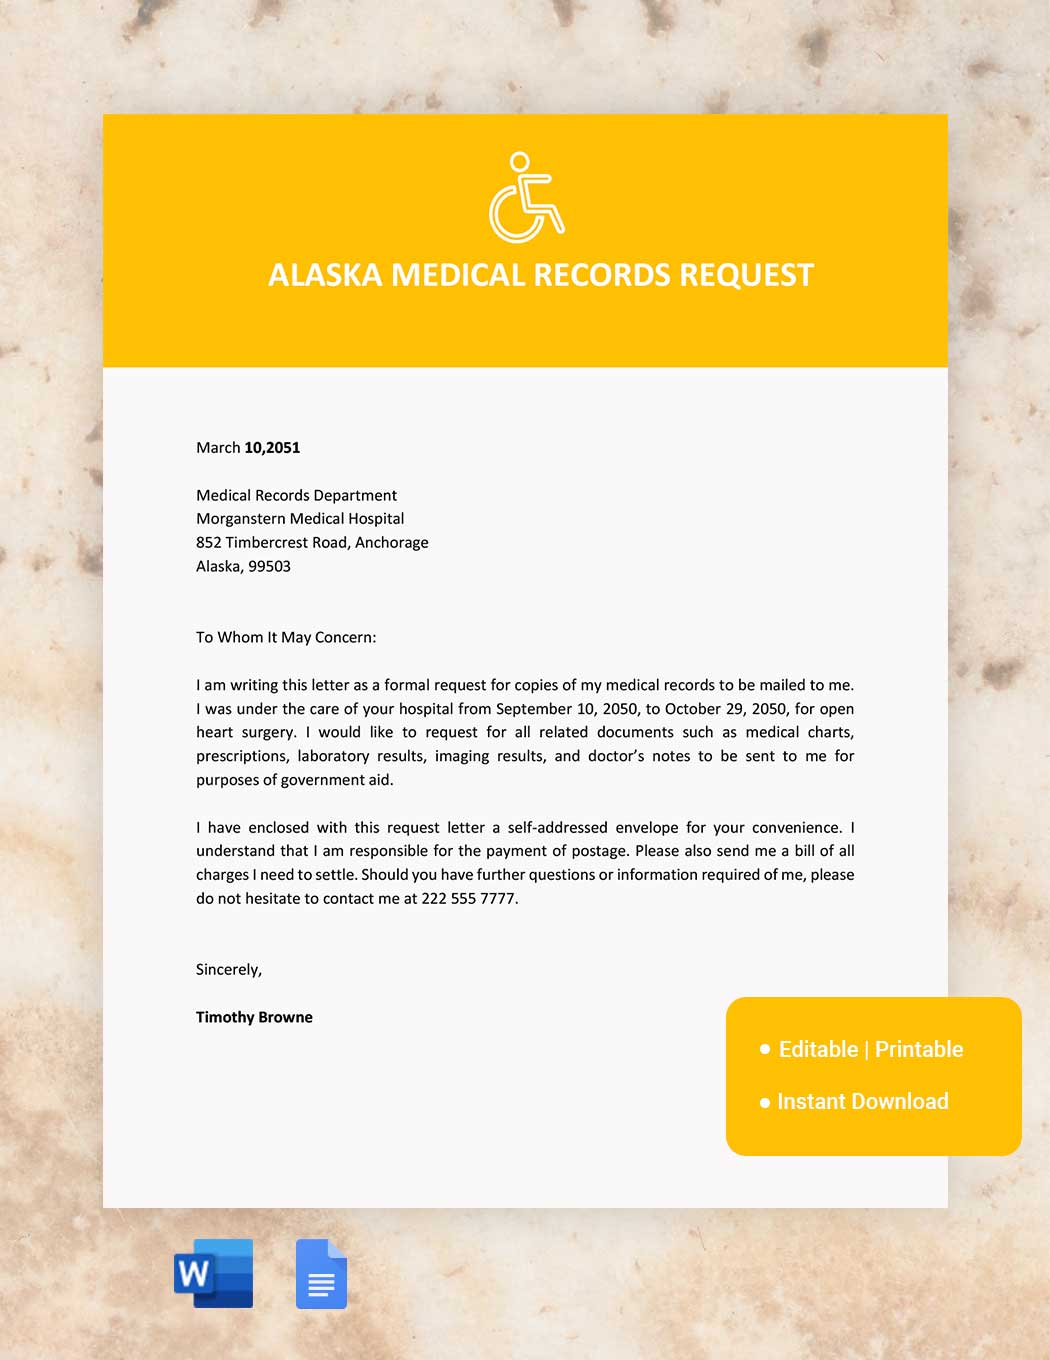 Alaska Medical Records Request Template in Word, Google Docs